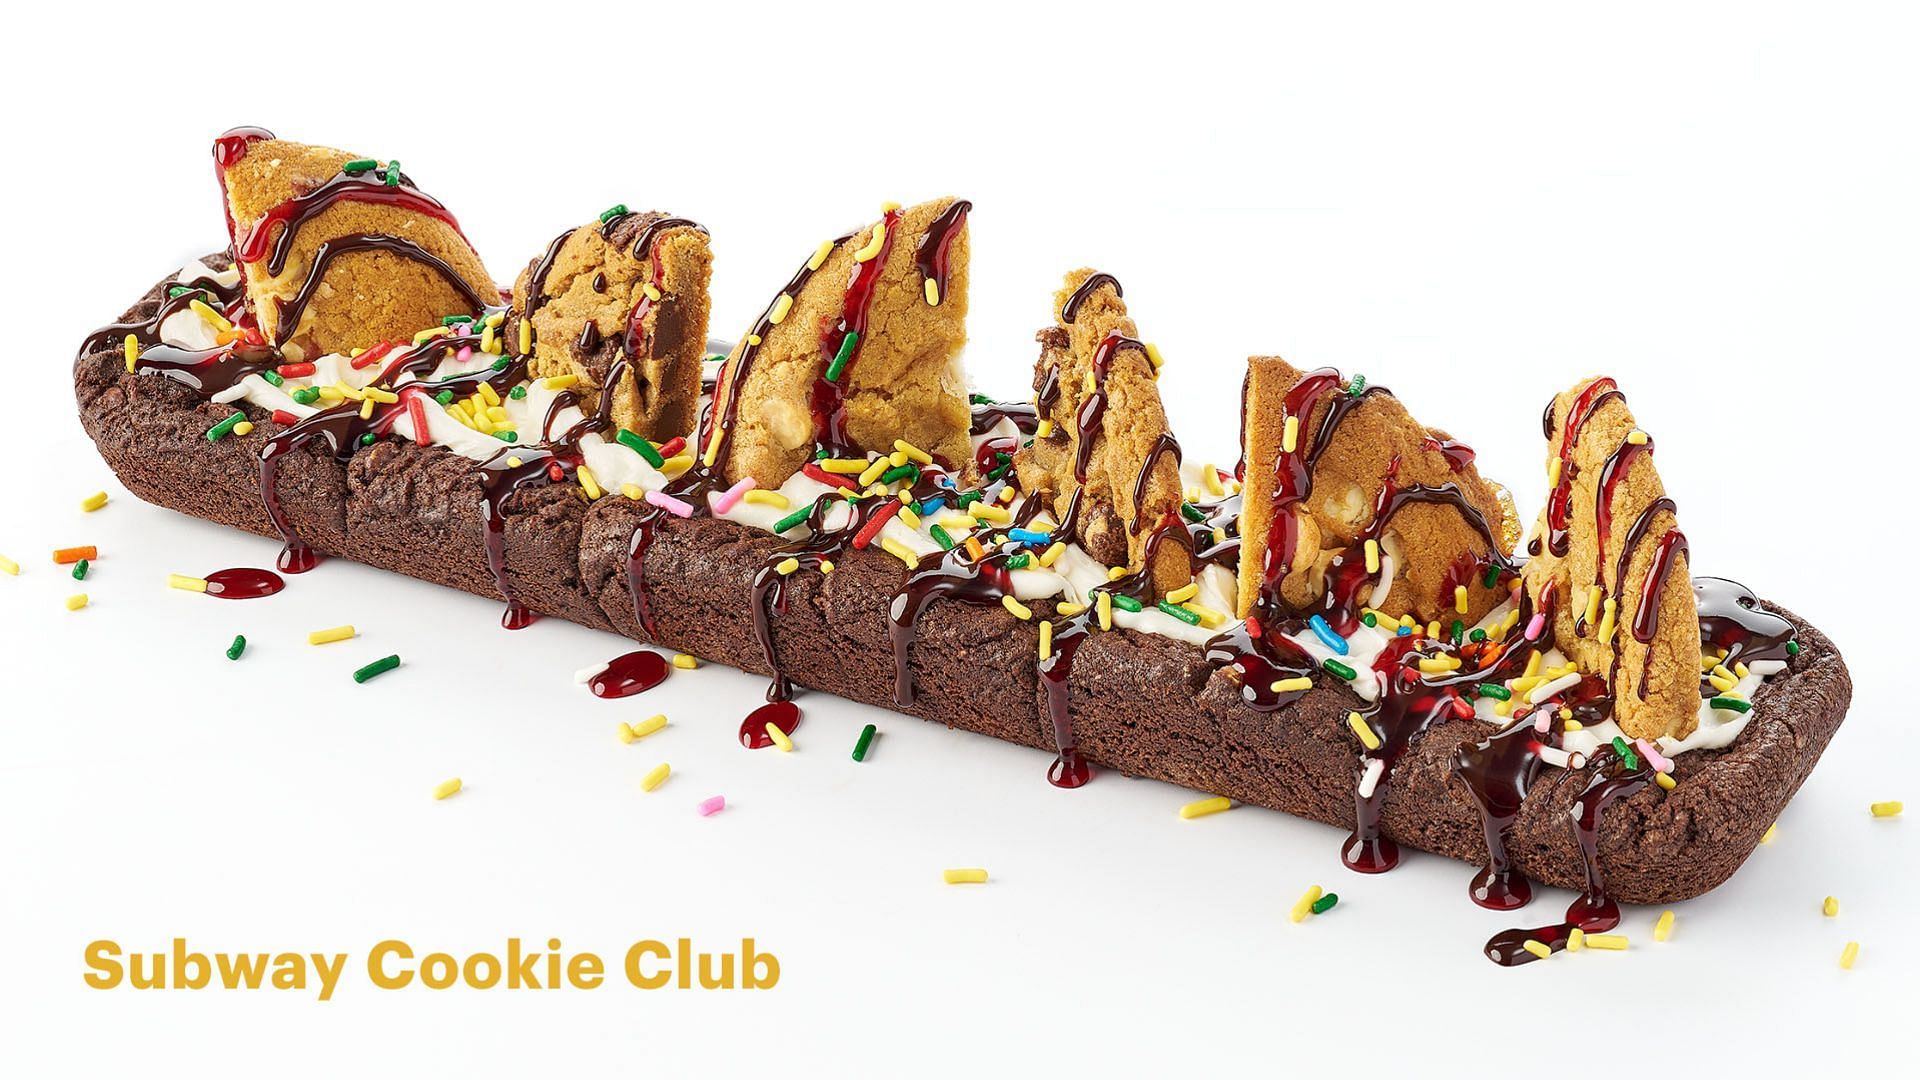 The Subway Cookie Club footlong cookie (Image via Subway)